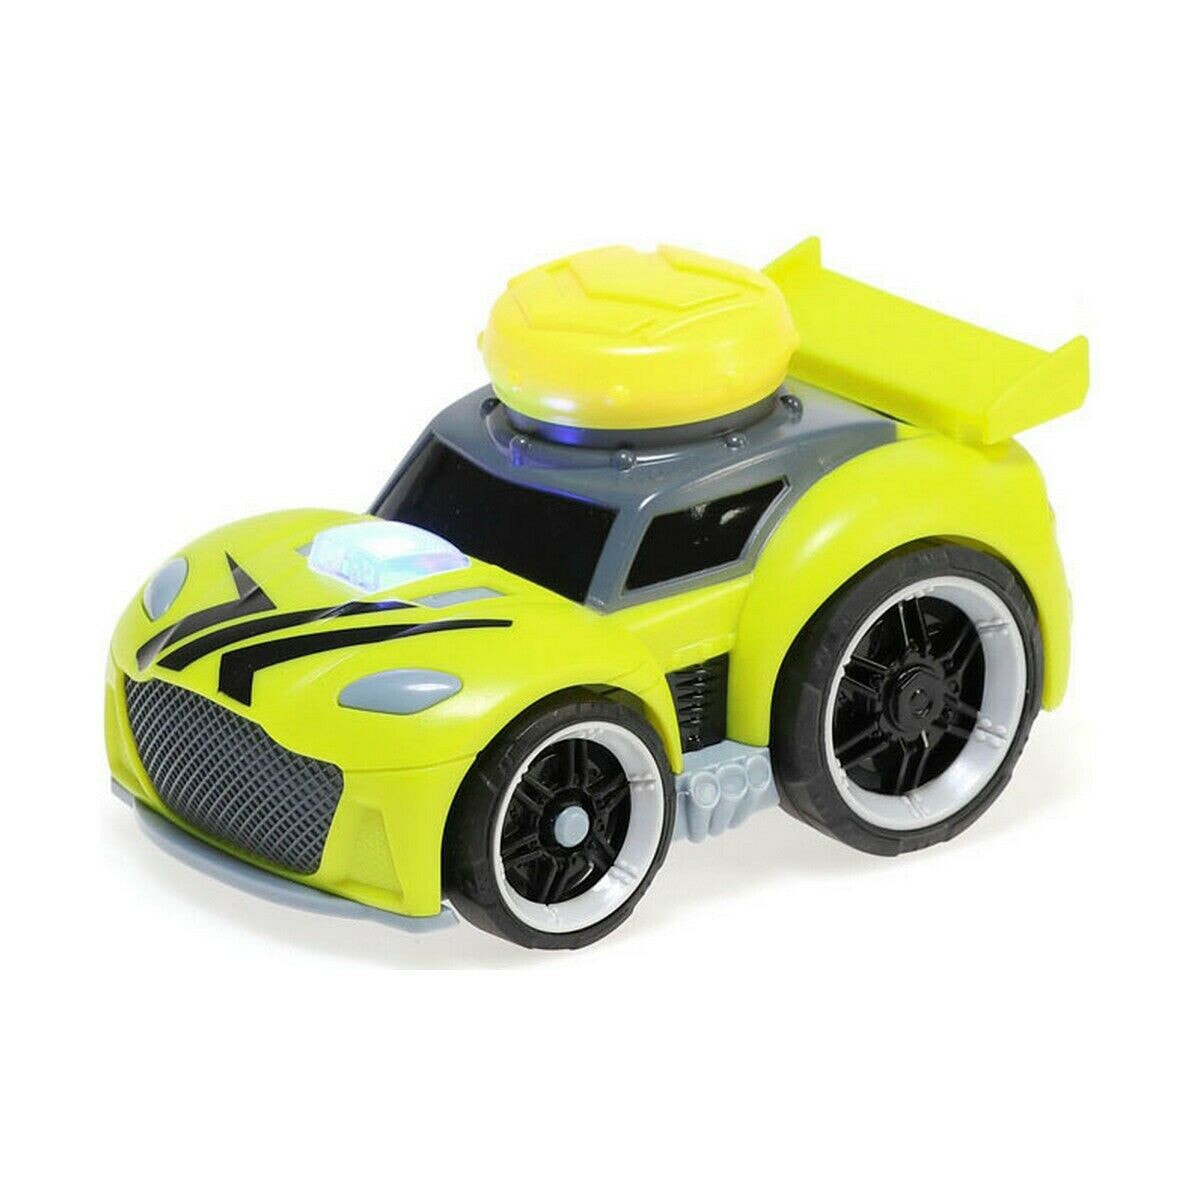 Toy car Crash Stunt Yellow